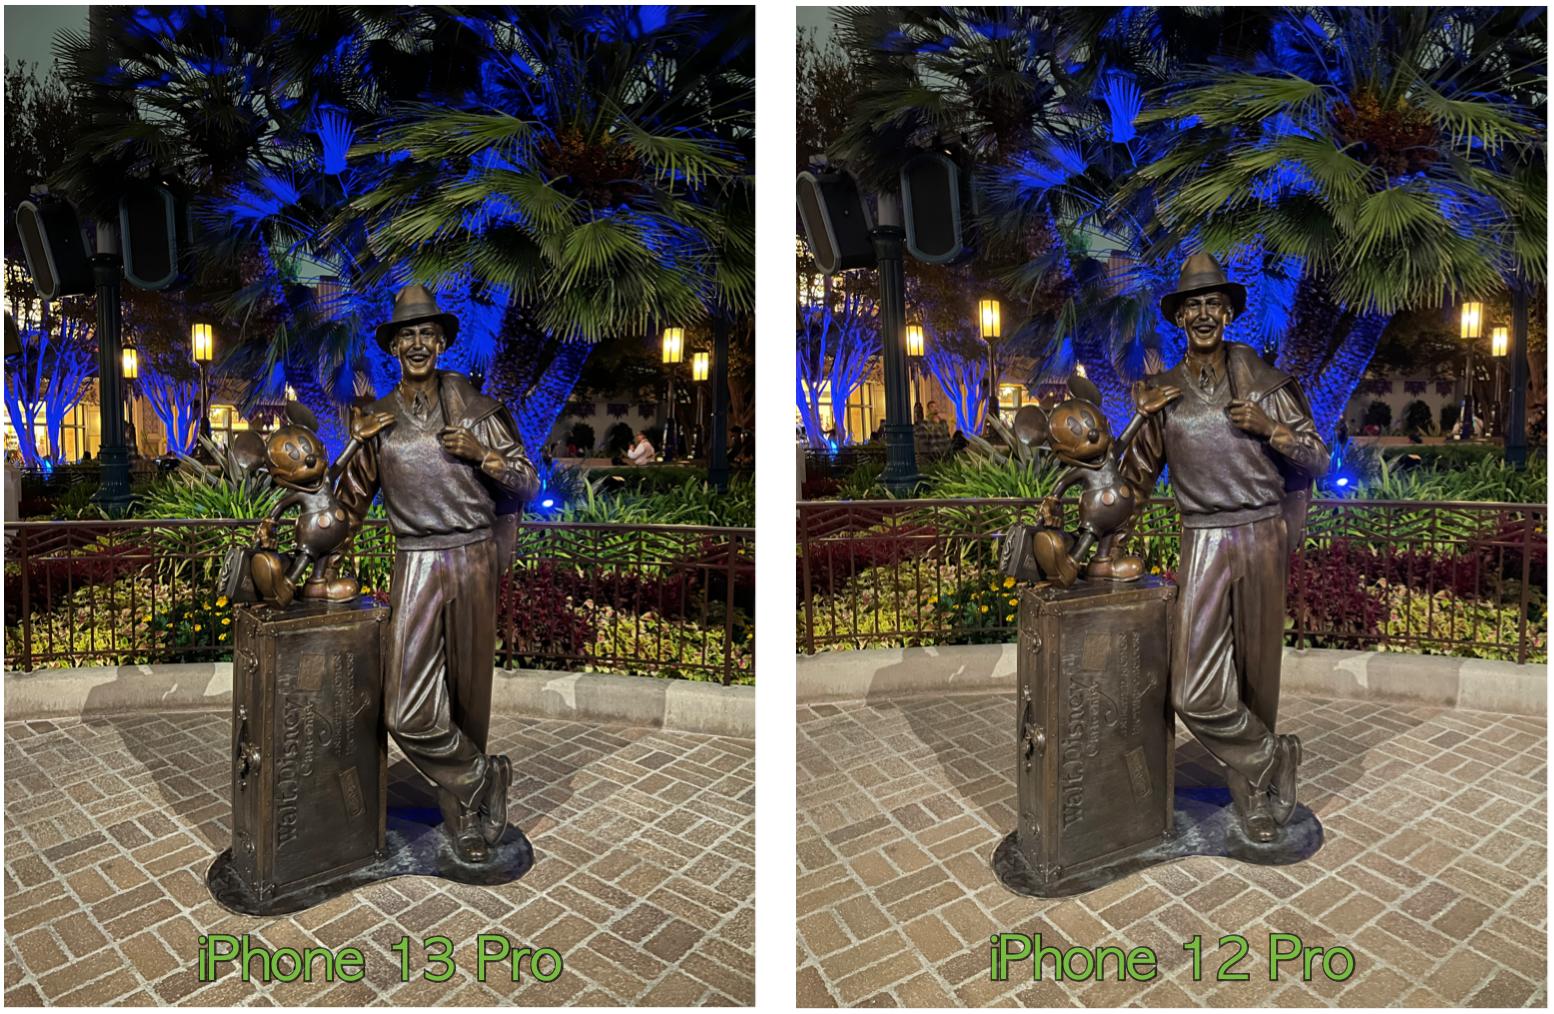 Dca Walt Disney Statue Iphone Comparison